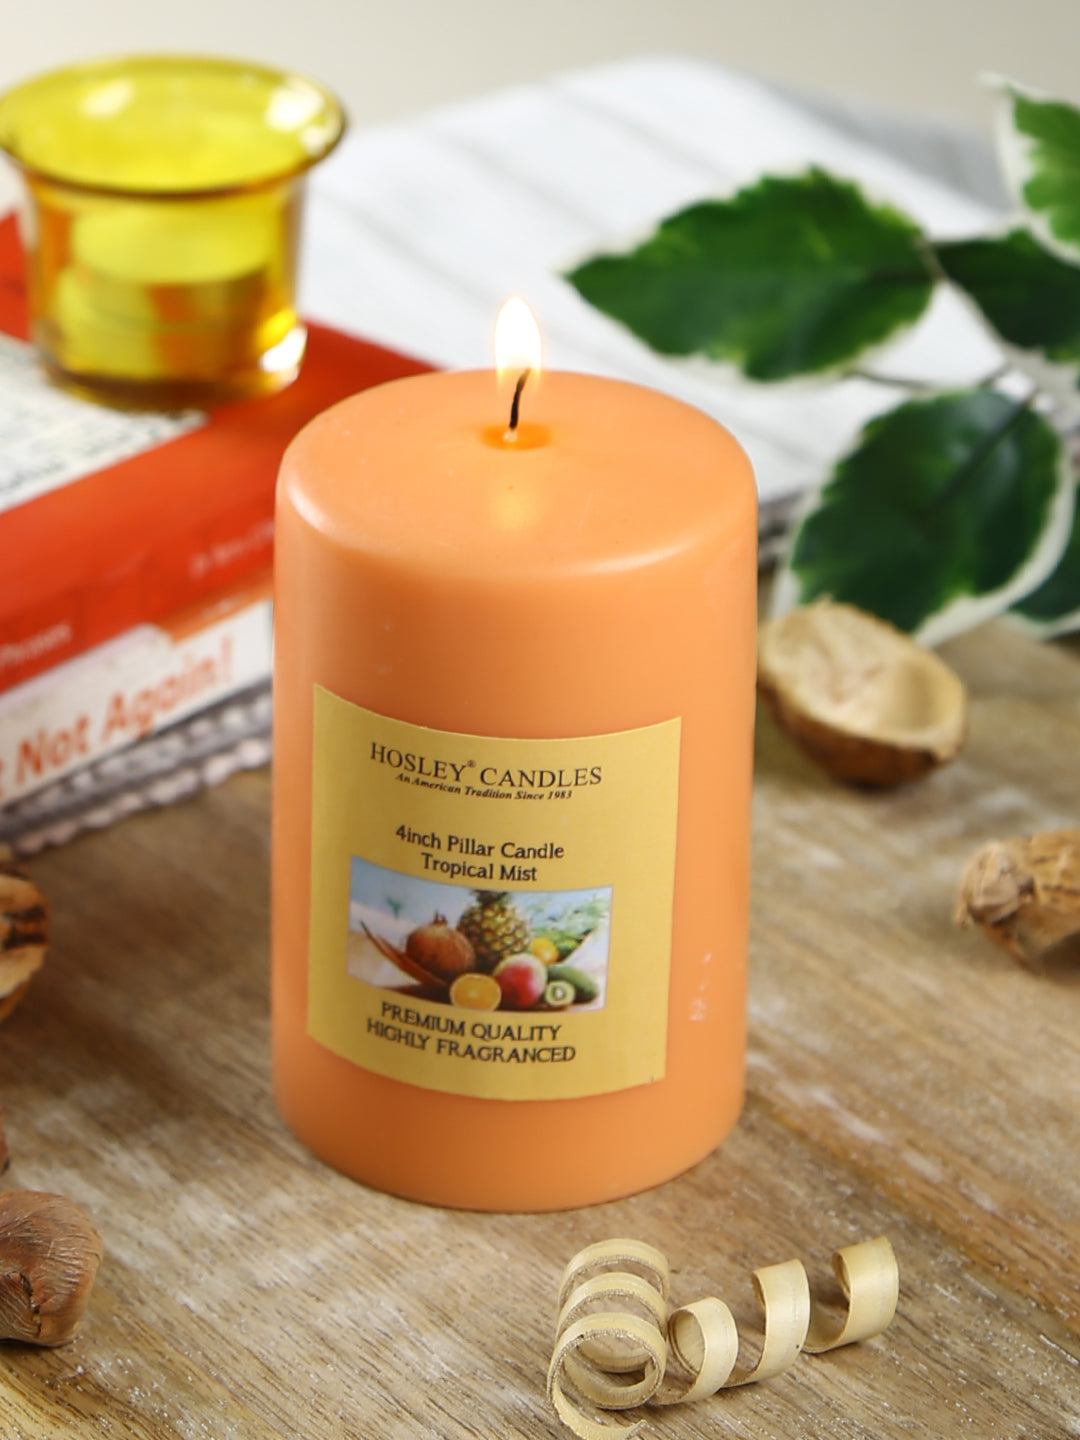 Hosley® Tropical Mist Highly Fragranced 4inch Pillar Candle